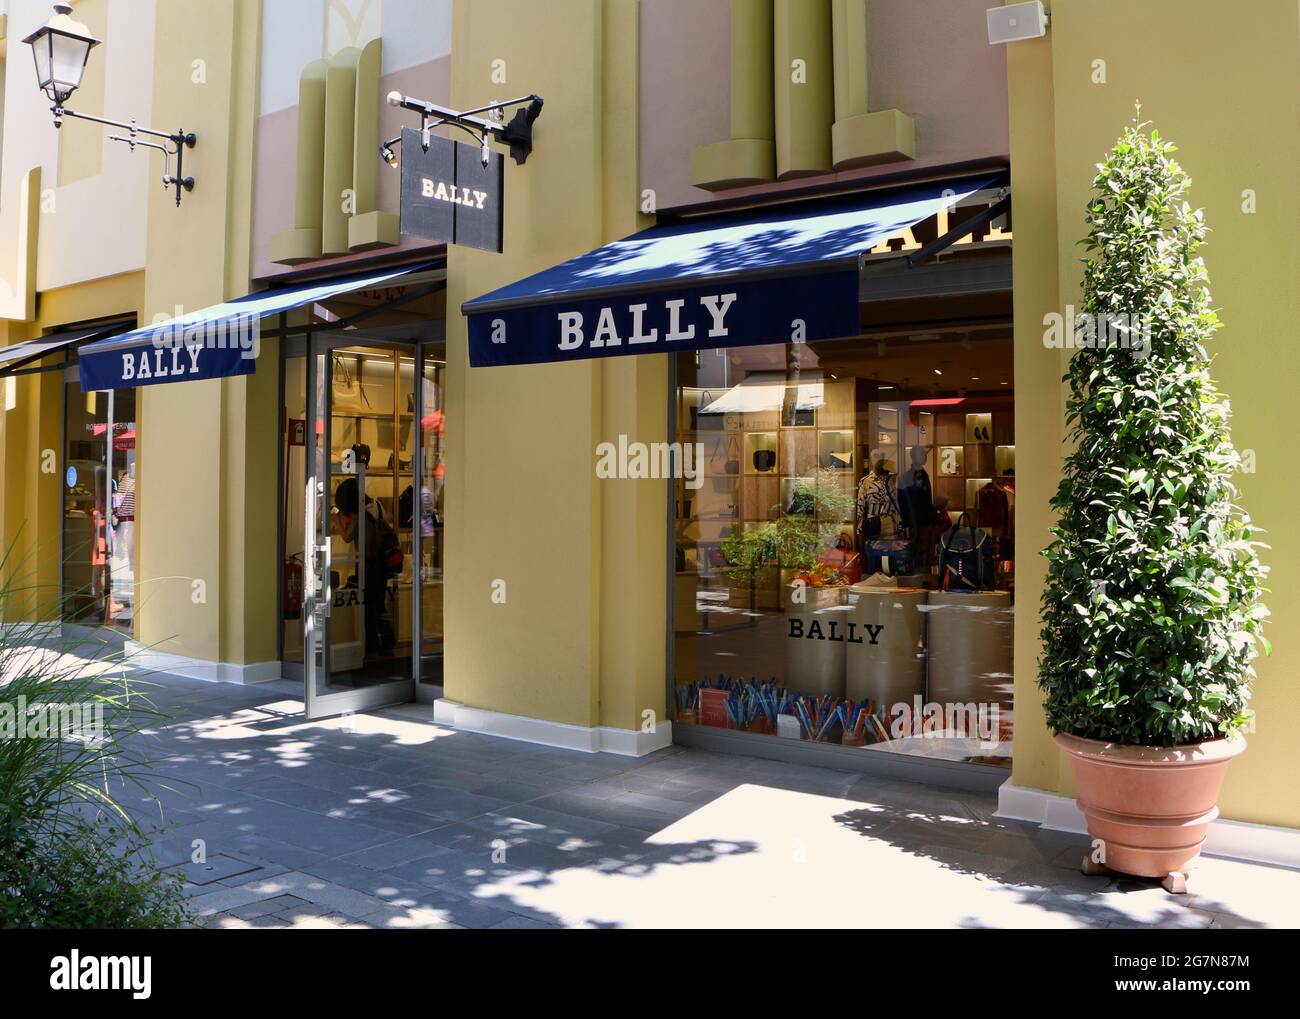 Bally shoe retailer shop sign and shop entrance Las Rozas shopping mall  Madrid Spain Stock Photo - Alamy